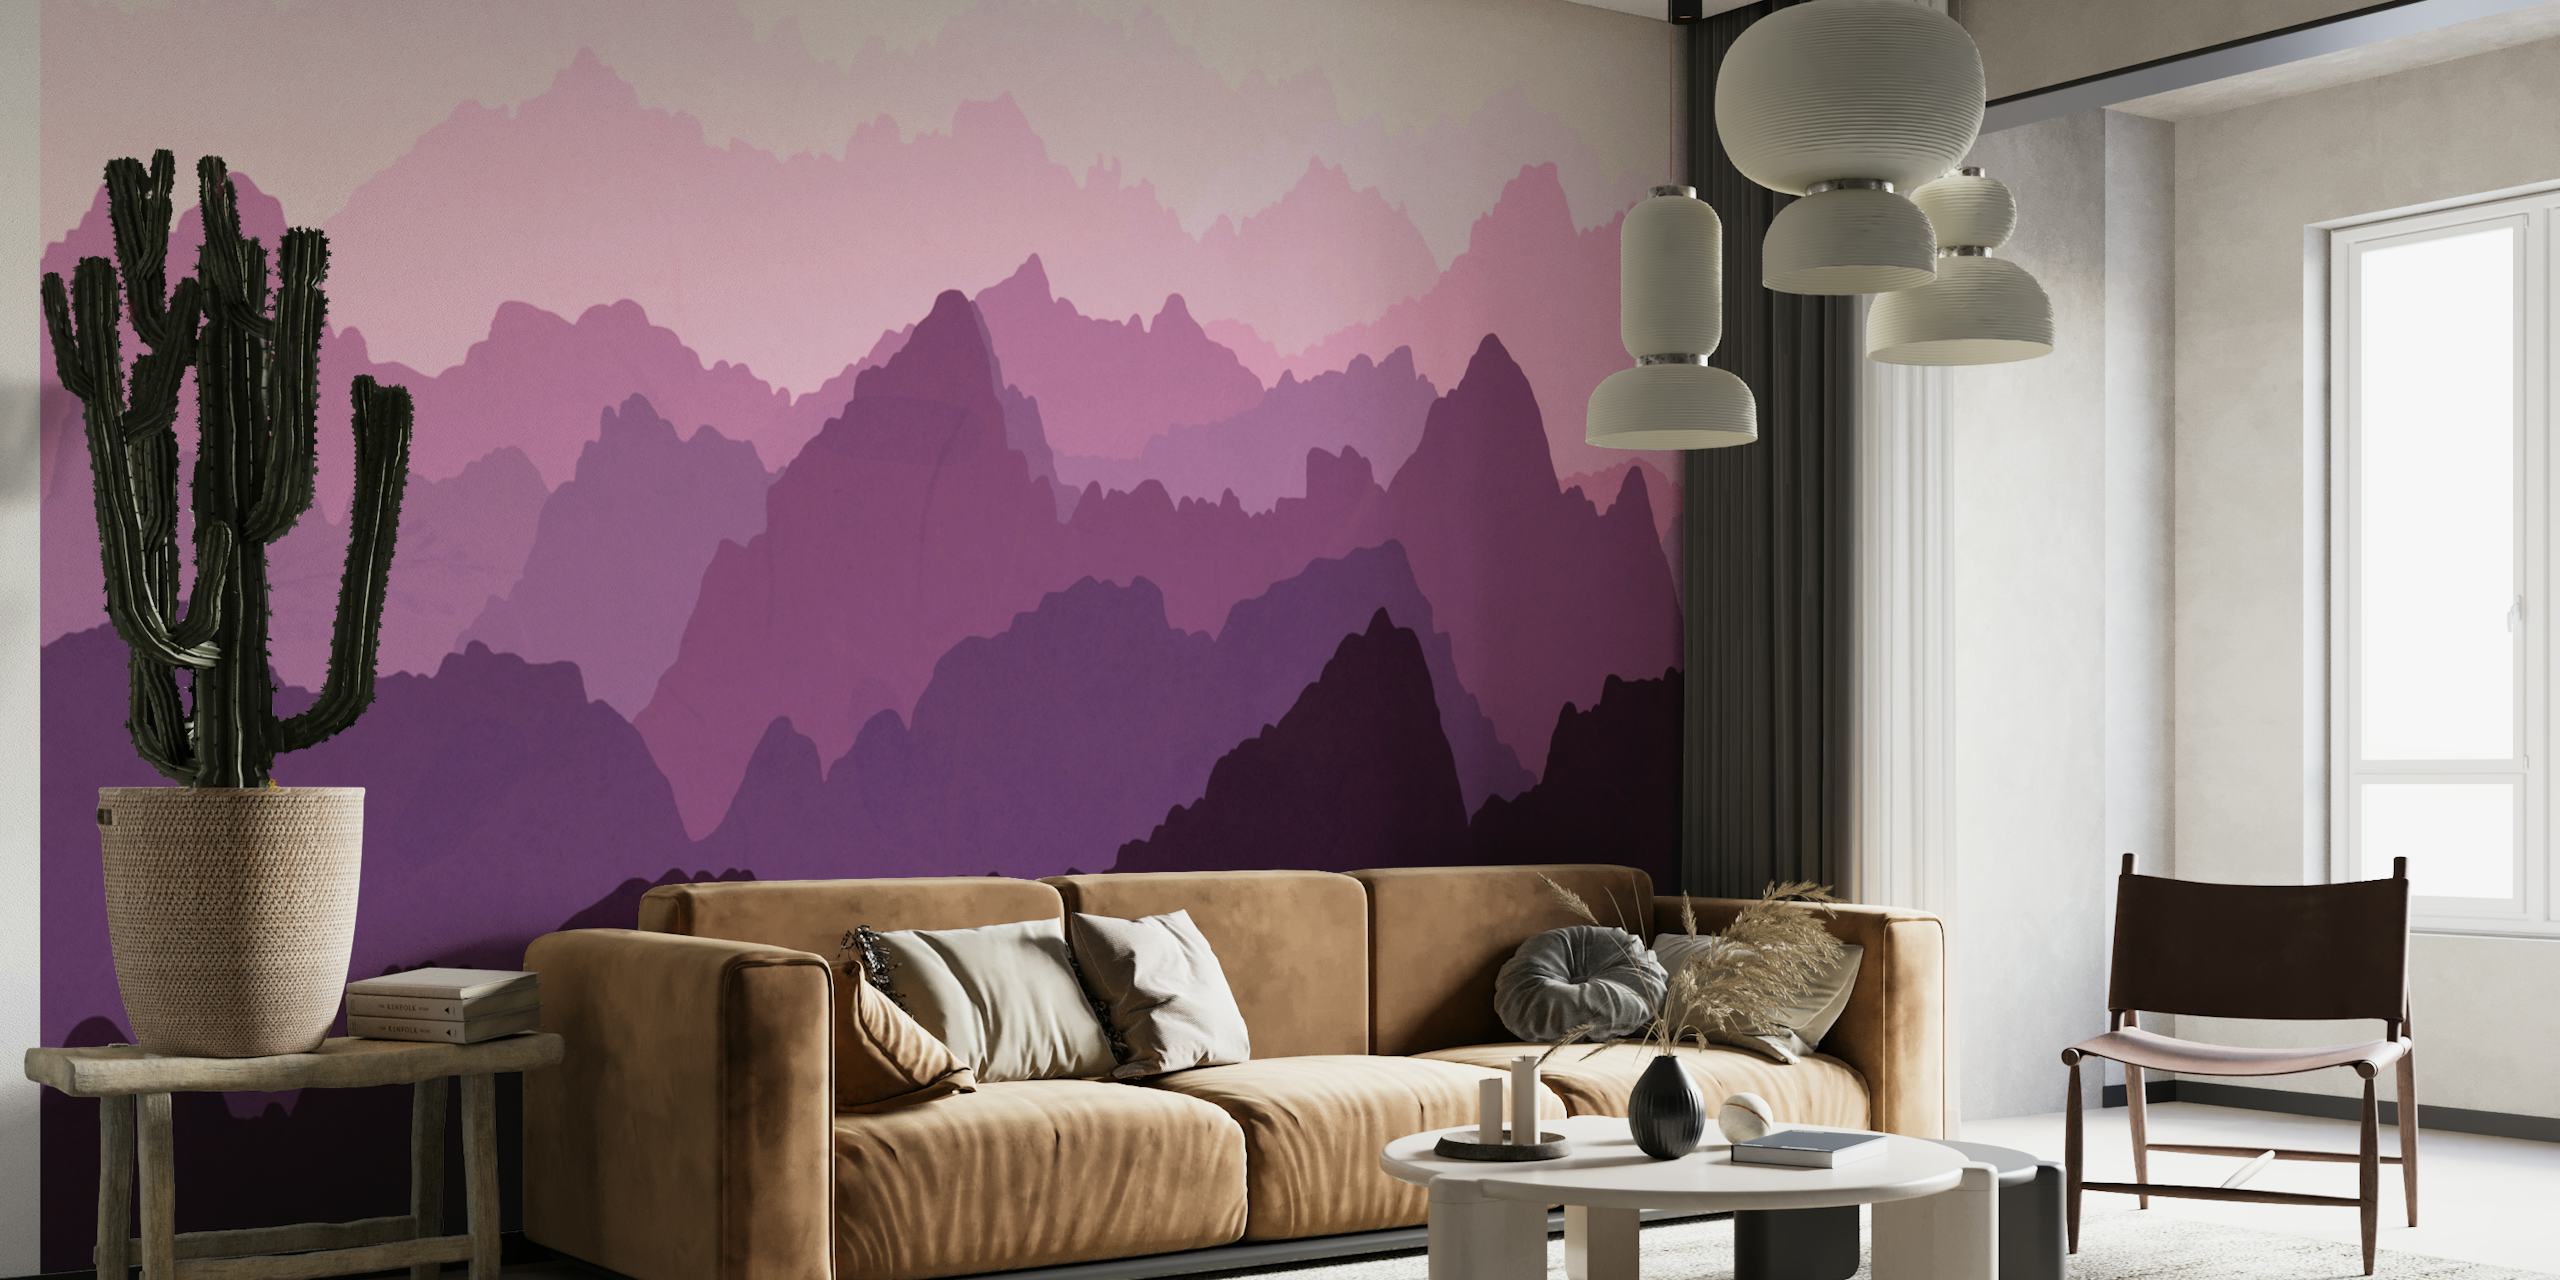 Mountains in Pink Fog papel pintado